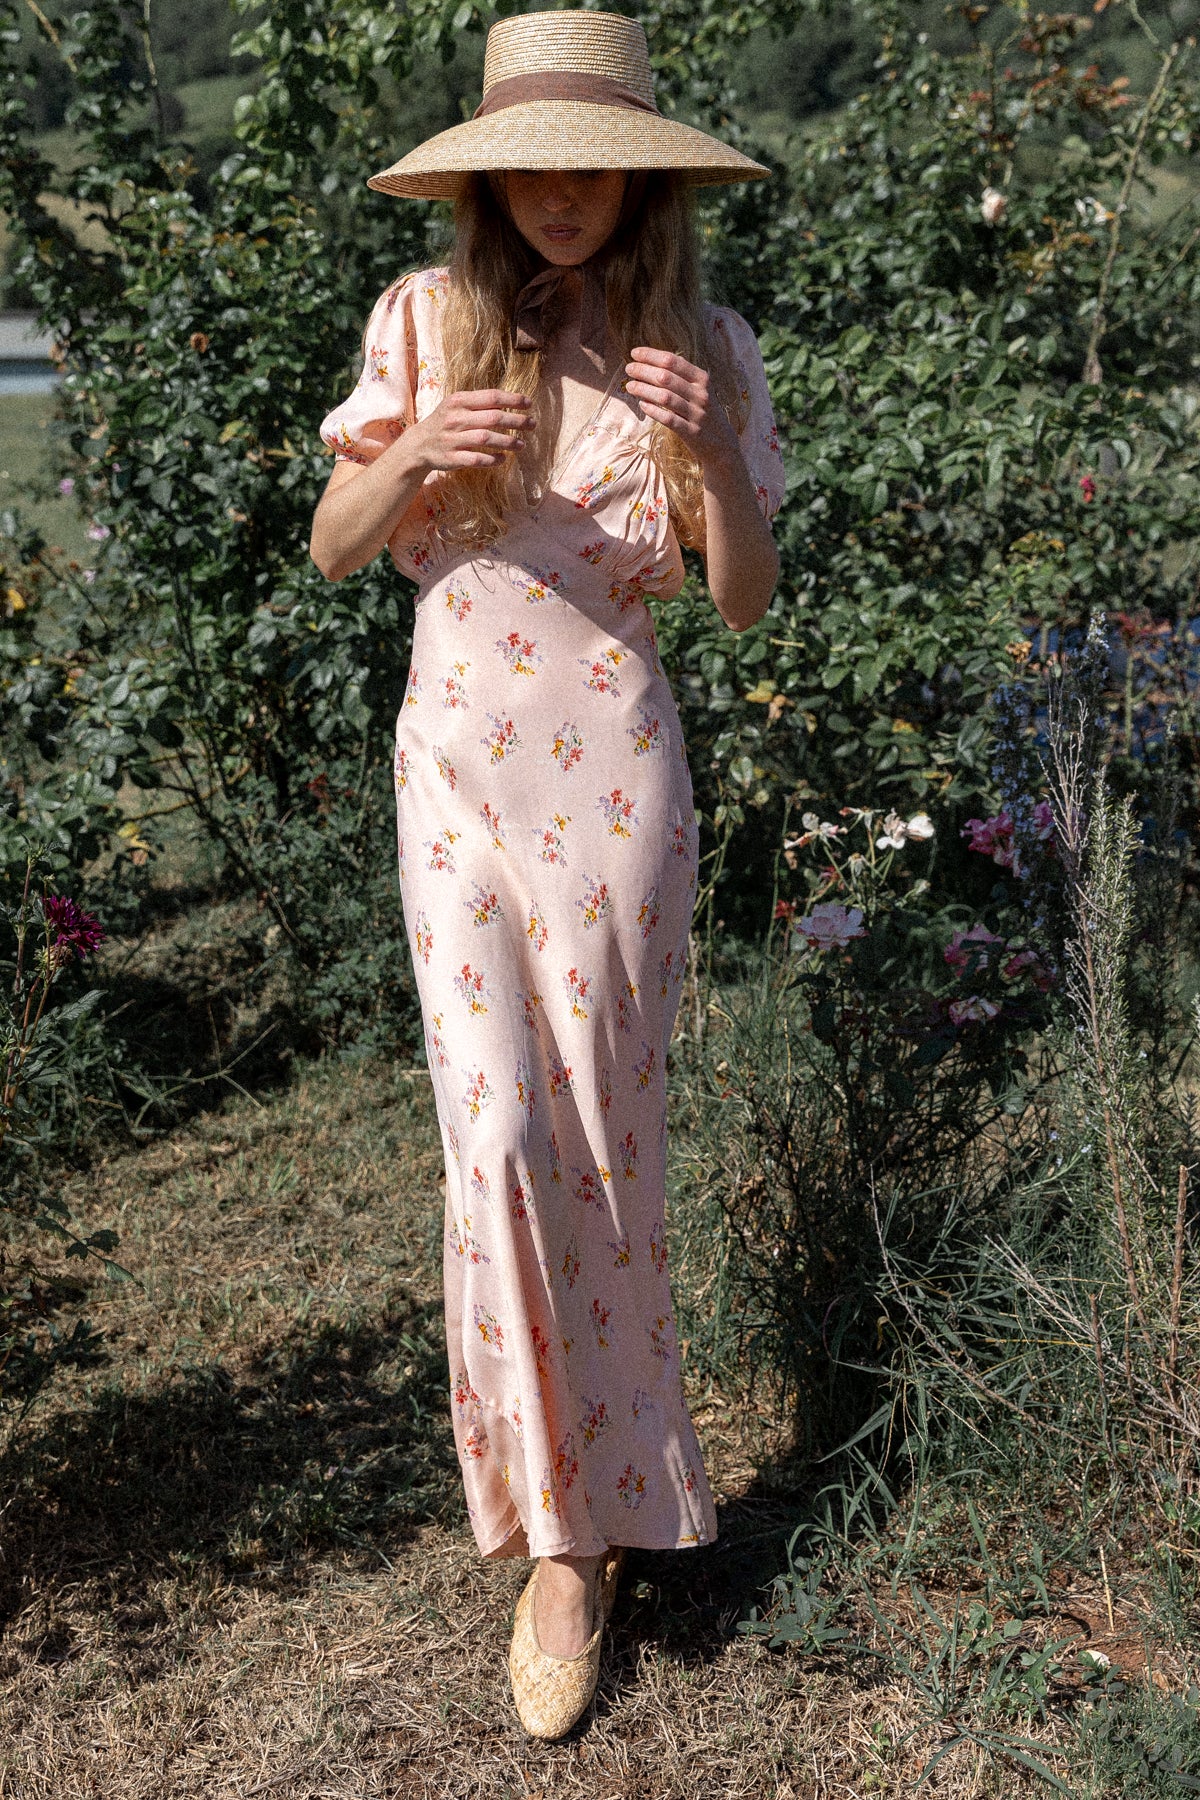 VINTAGE 1930's Pink Floral Cap Sleeve Nightgown Slip Dress S/M